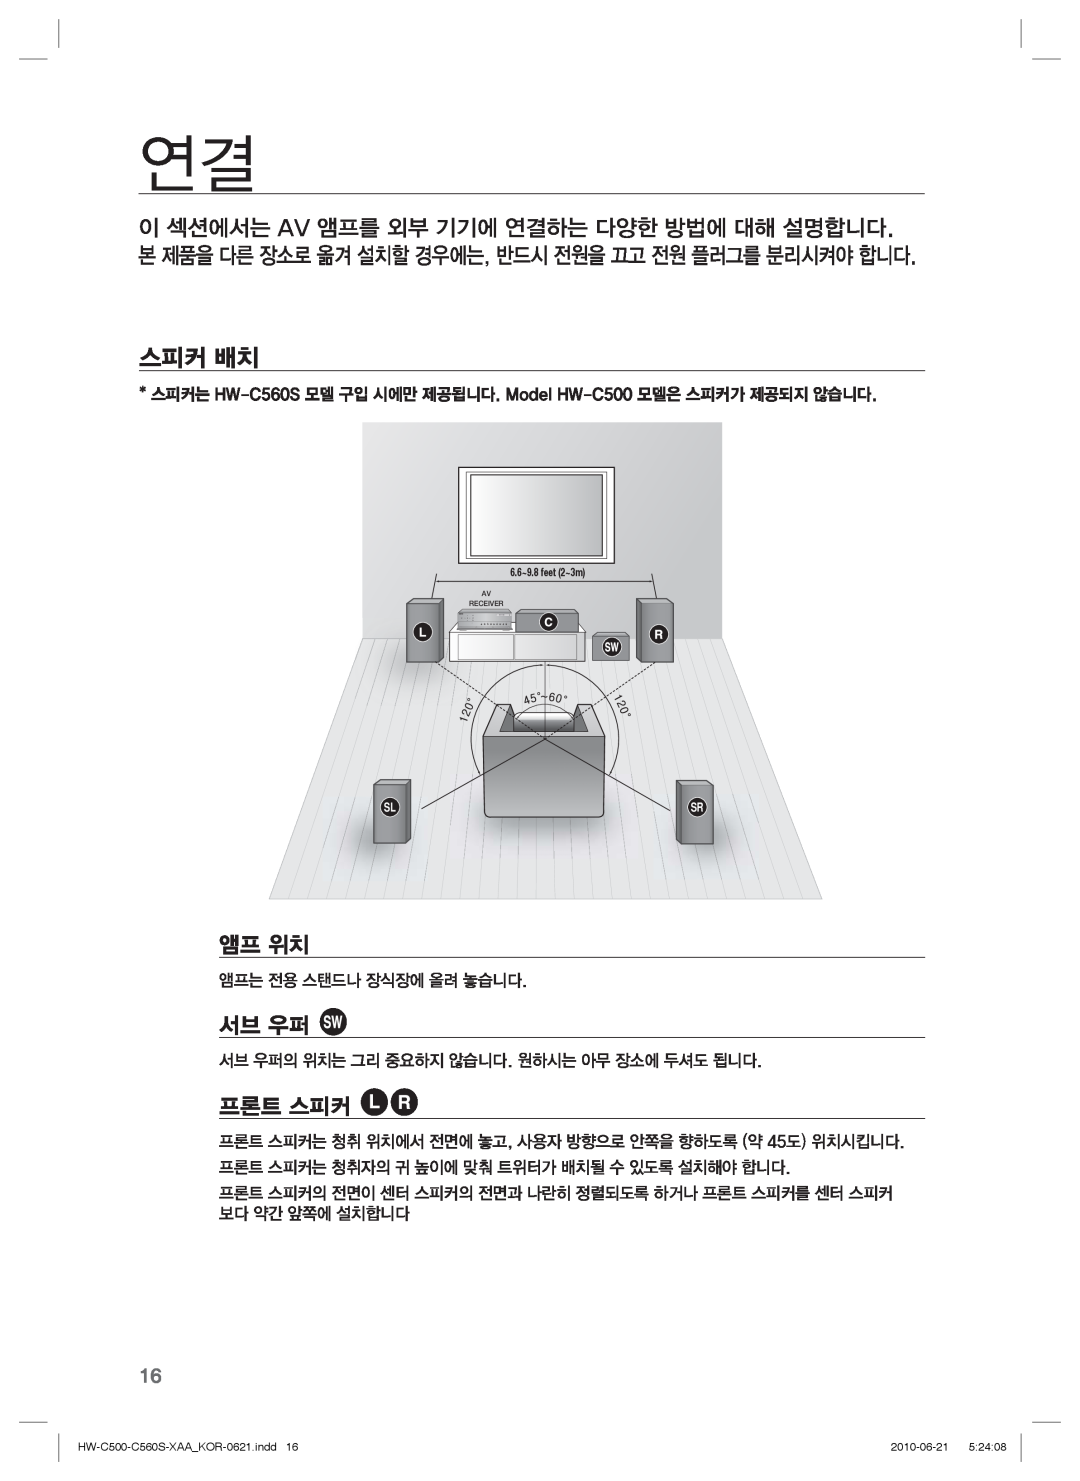 Samsung 스피커 배치, 앰프 위치, 서브 우퍼, 프론트 스피커, 6.6~9.8 feet 2~3m, HW-C500-C560S-XAA KOR-0621.indd16, 2010-06-21, Av Receiver 